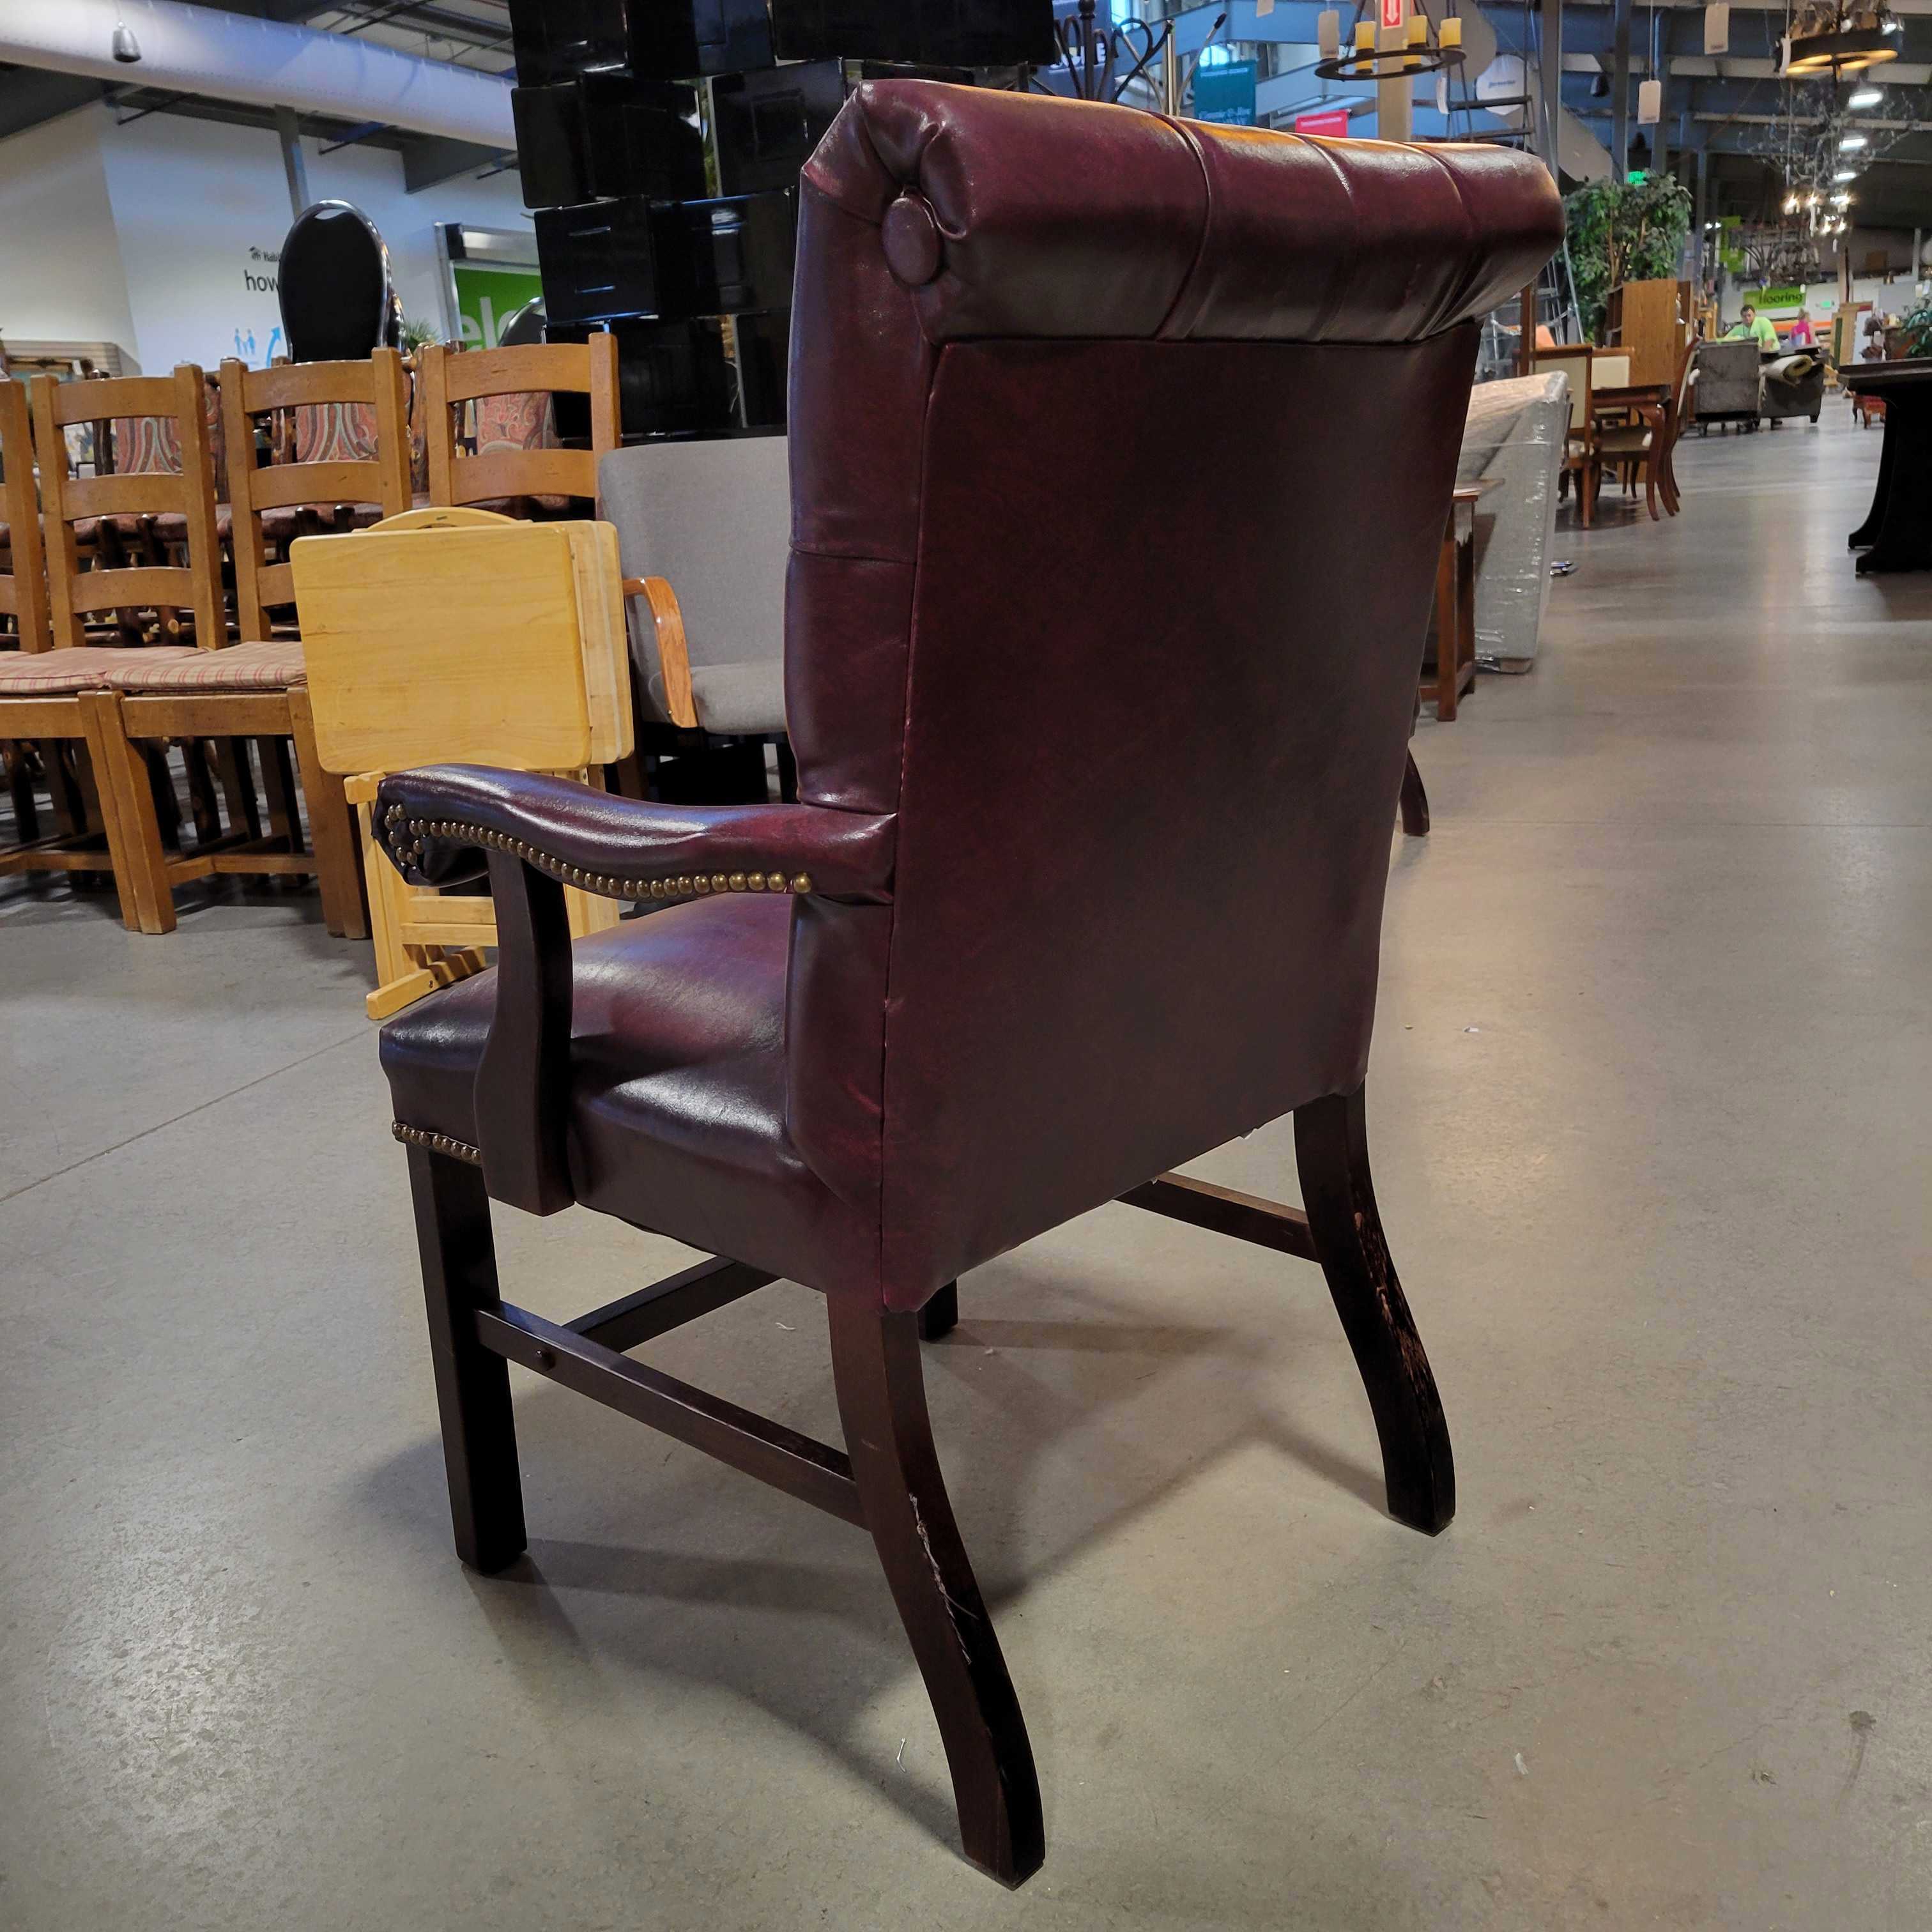 25"x 23"x 39" Burgundy Faux Leather Tufted Nailhead Arm Chair